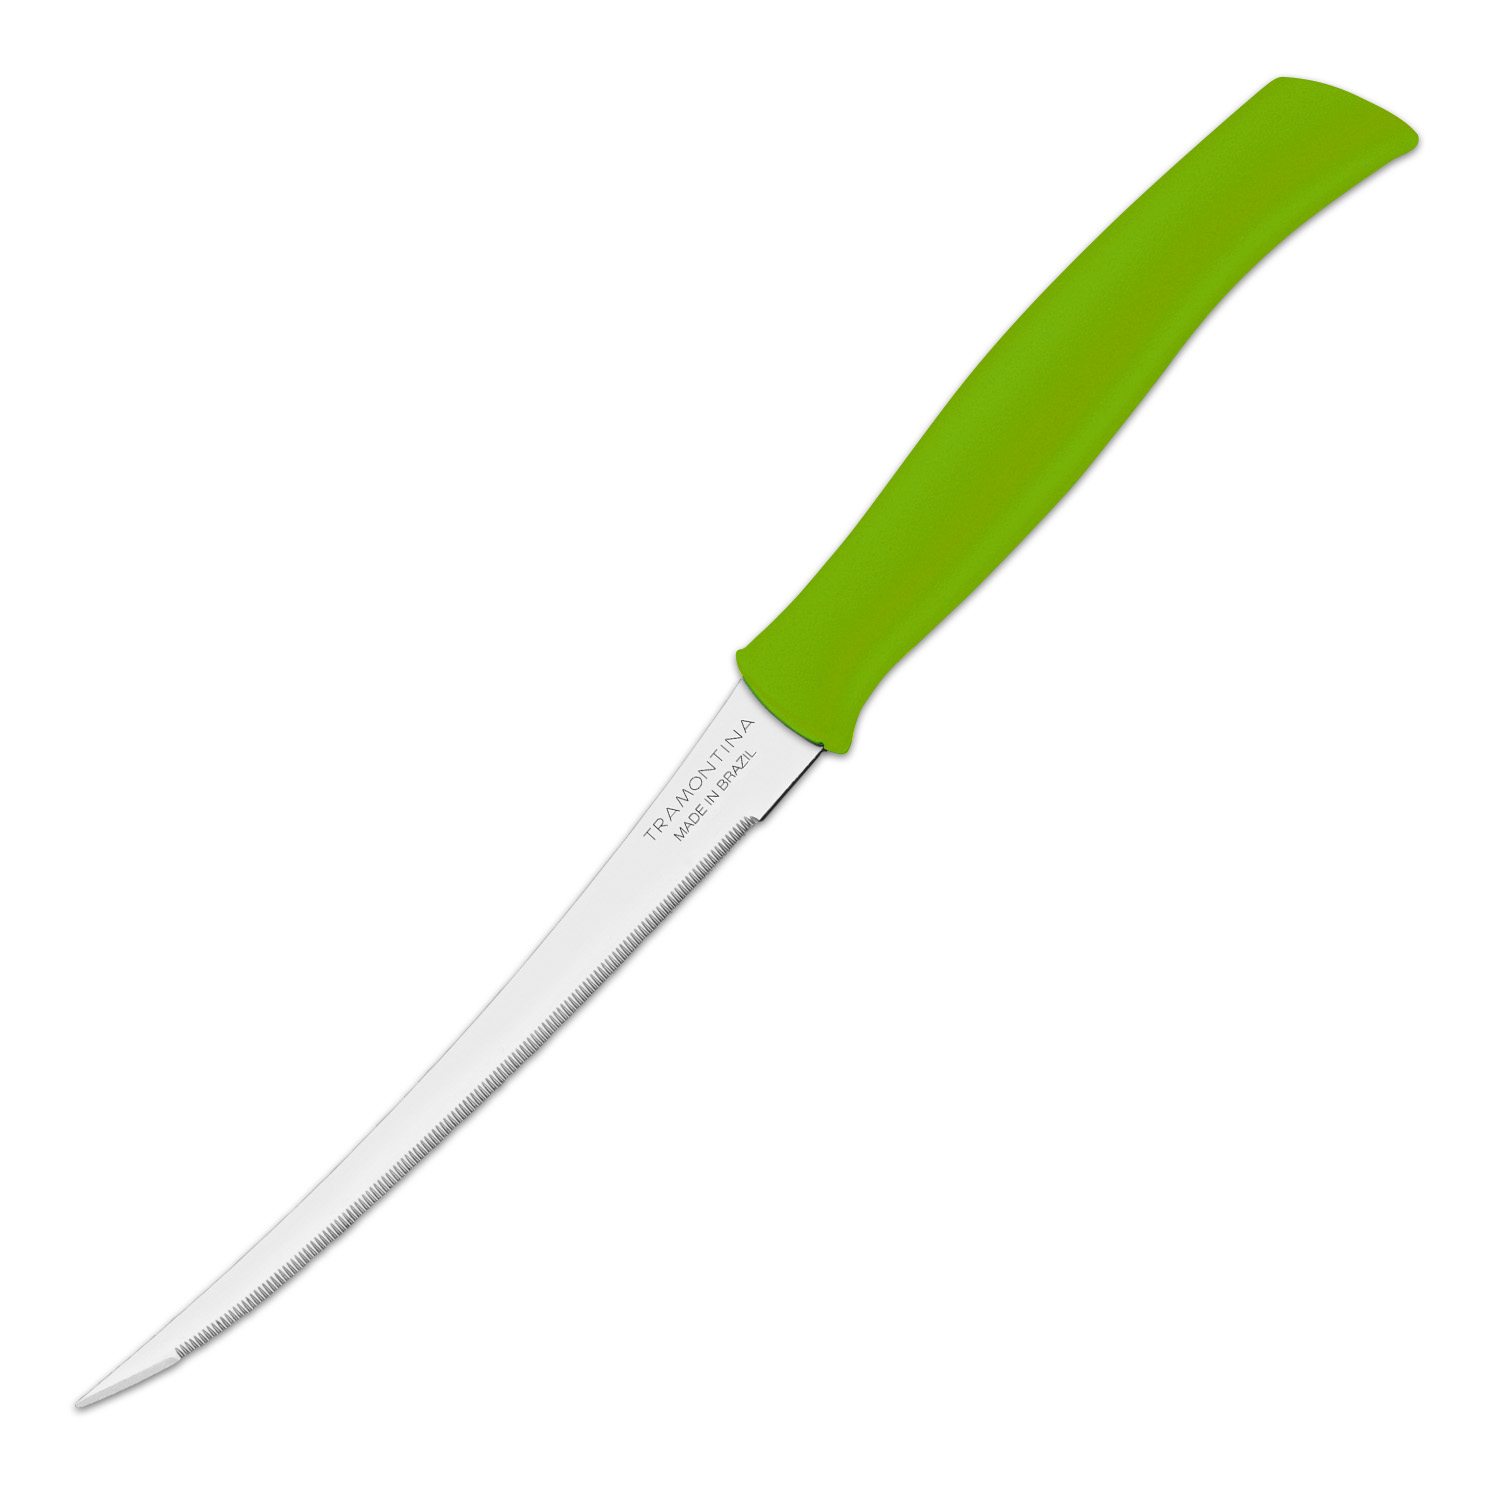 Нож Athus 127мм/227мм для томата зеленый 3шт/уп